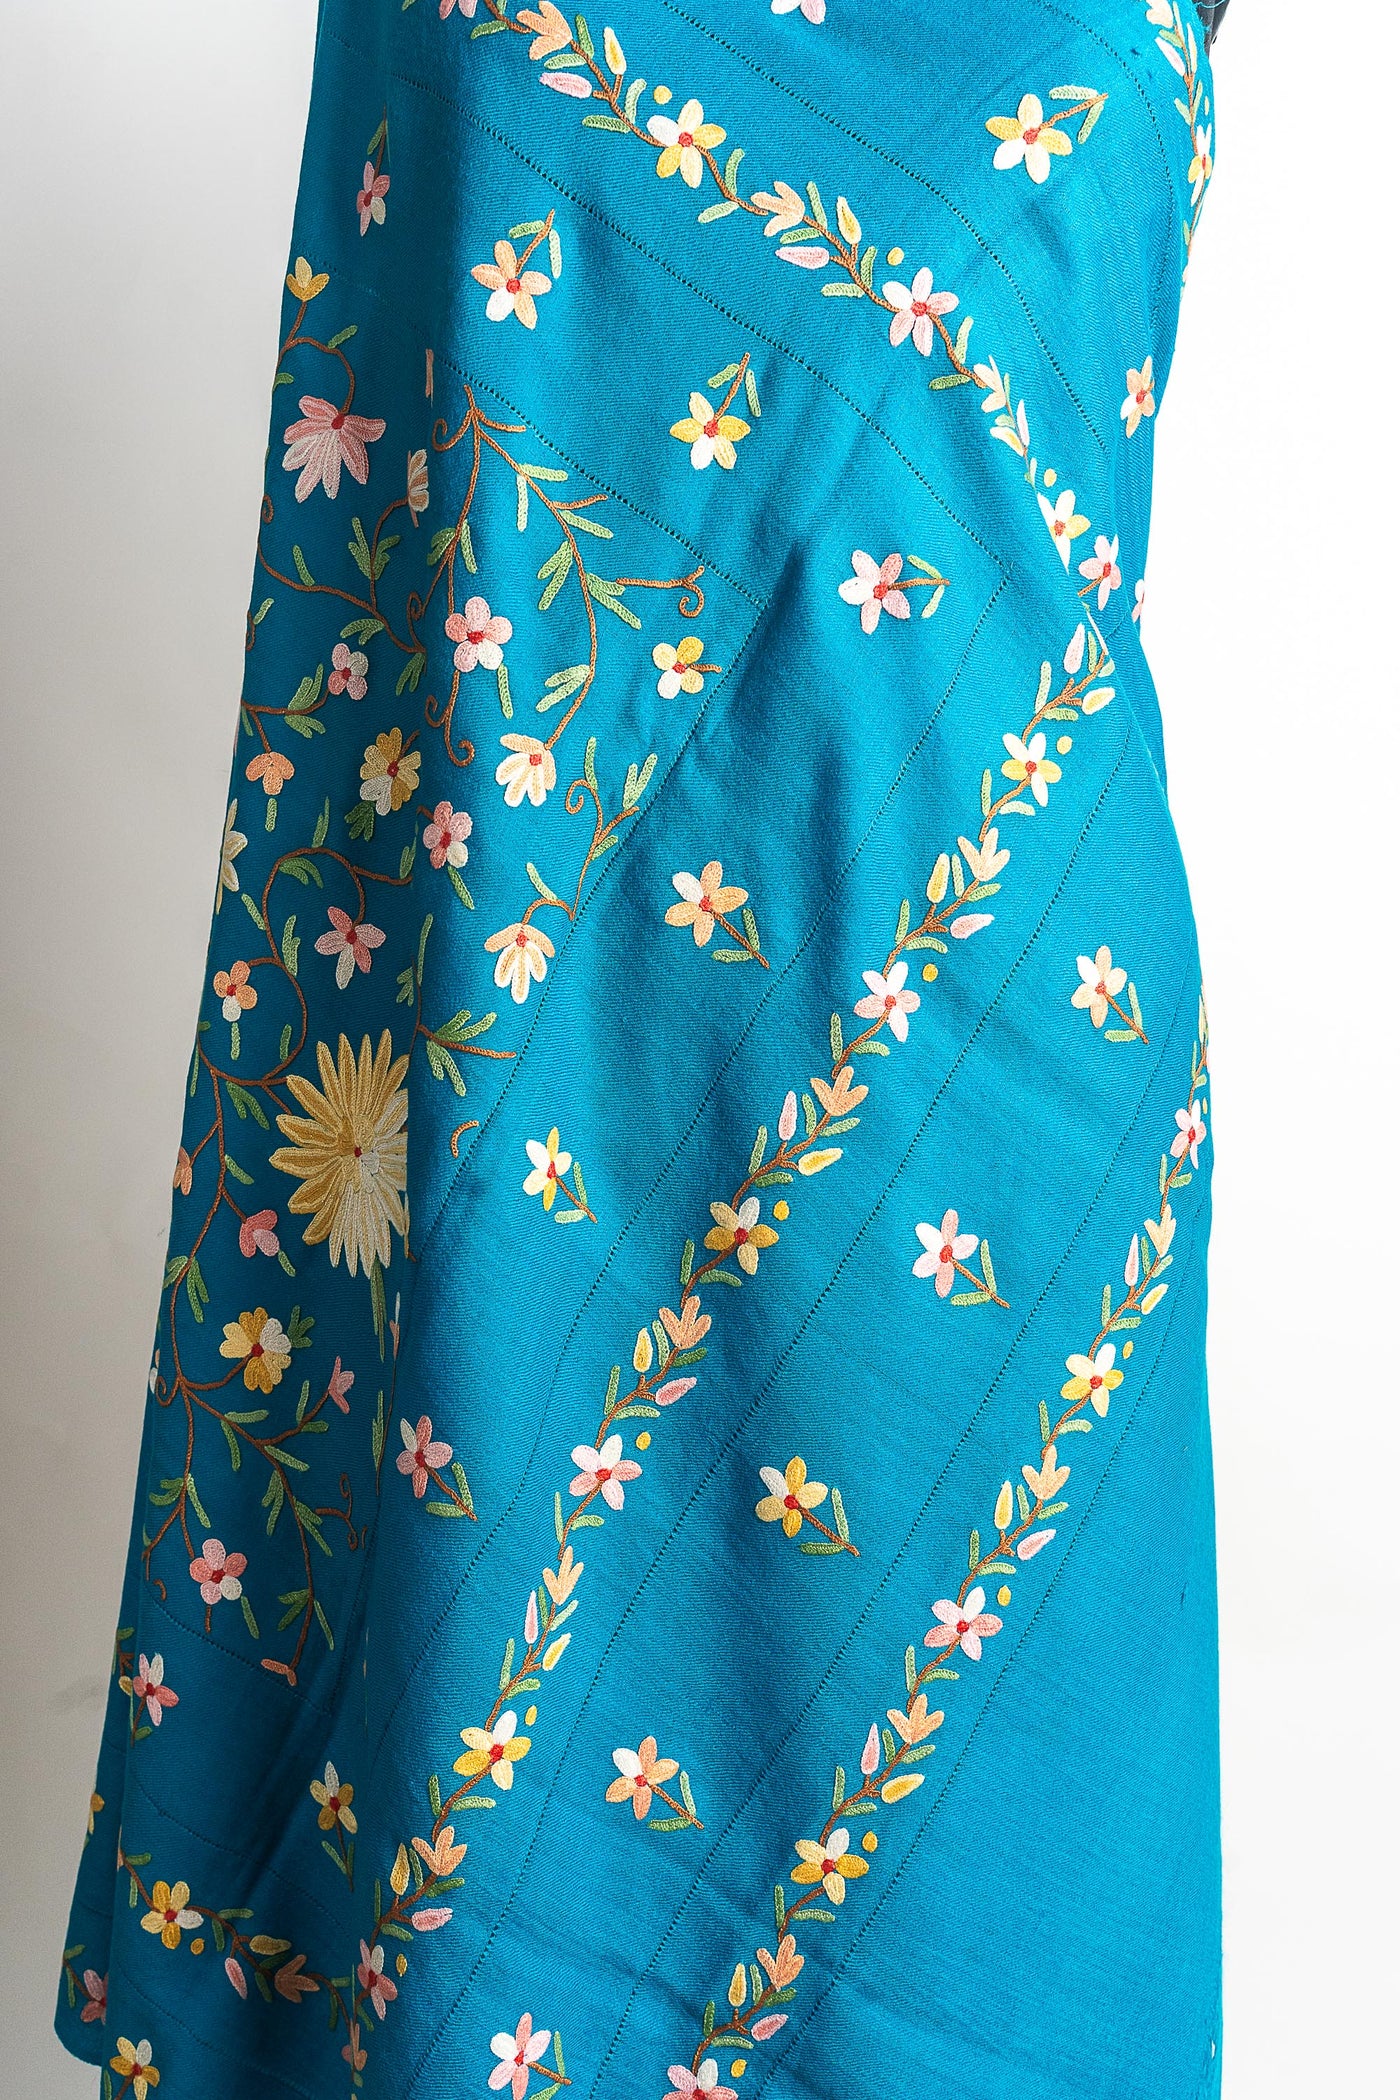 Sky Blue Merino Wool Shawl with Intricate Hand Aari Embroidery